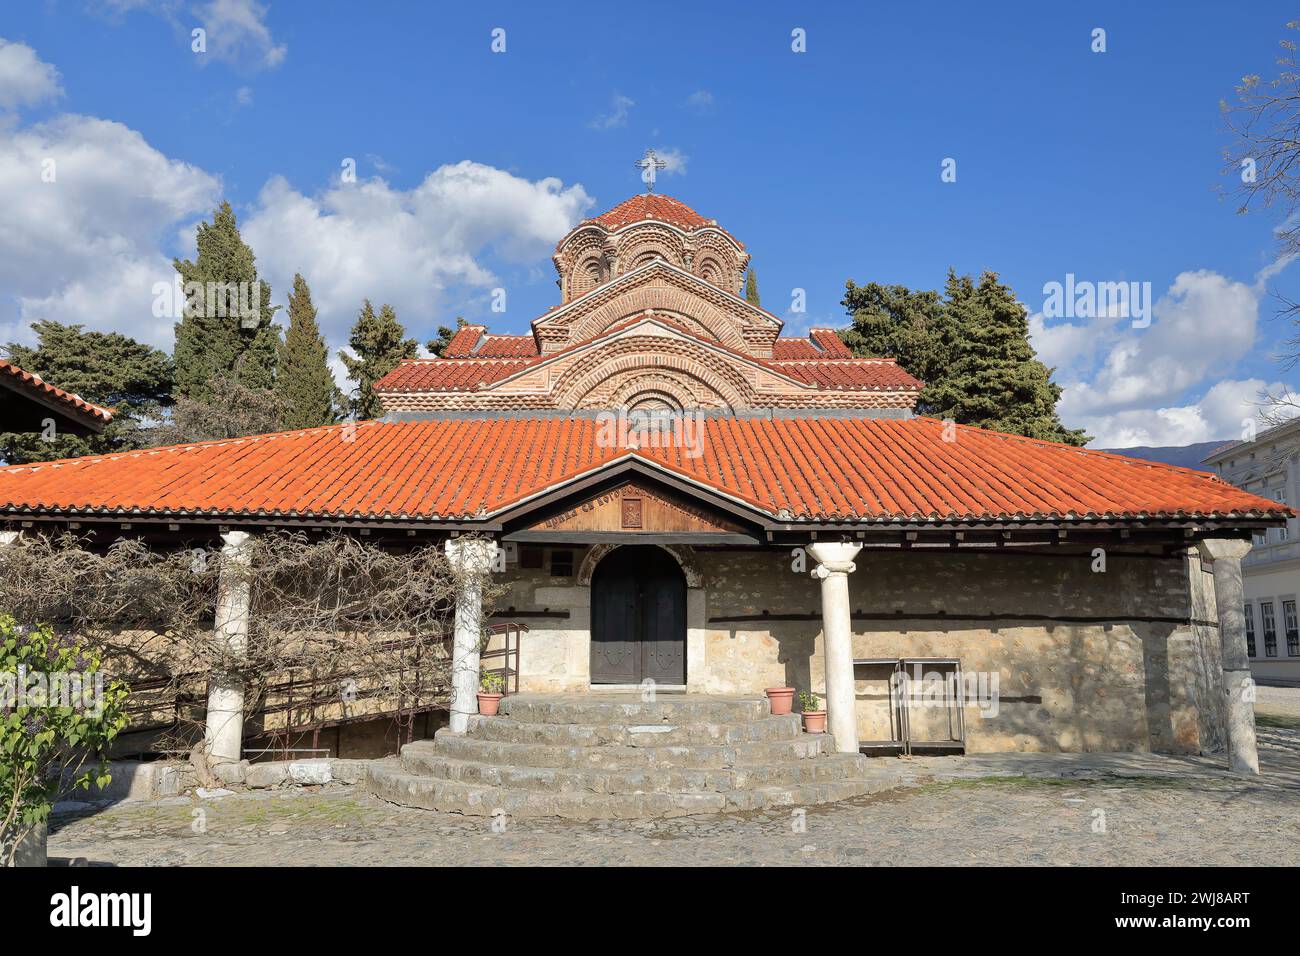 321-SS vue de face inclinée de l'église Sainte mère de Dieu Perivleptos -Crkva Presveta Bogorodica- datant de AD 1295. Ohrid-Macédoine du Nord. Banque D'Images